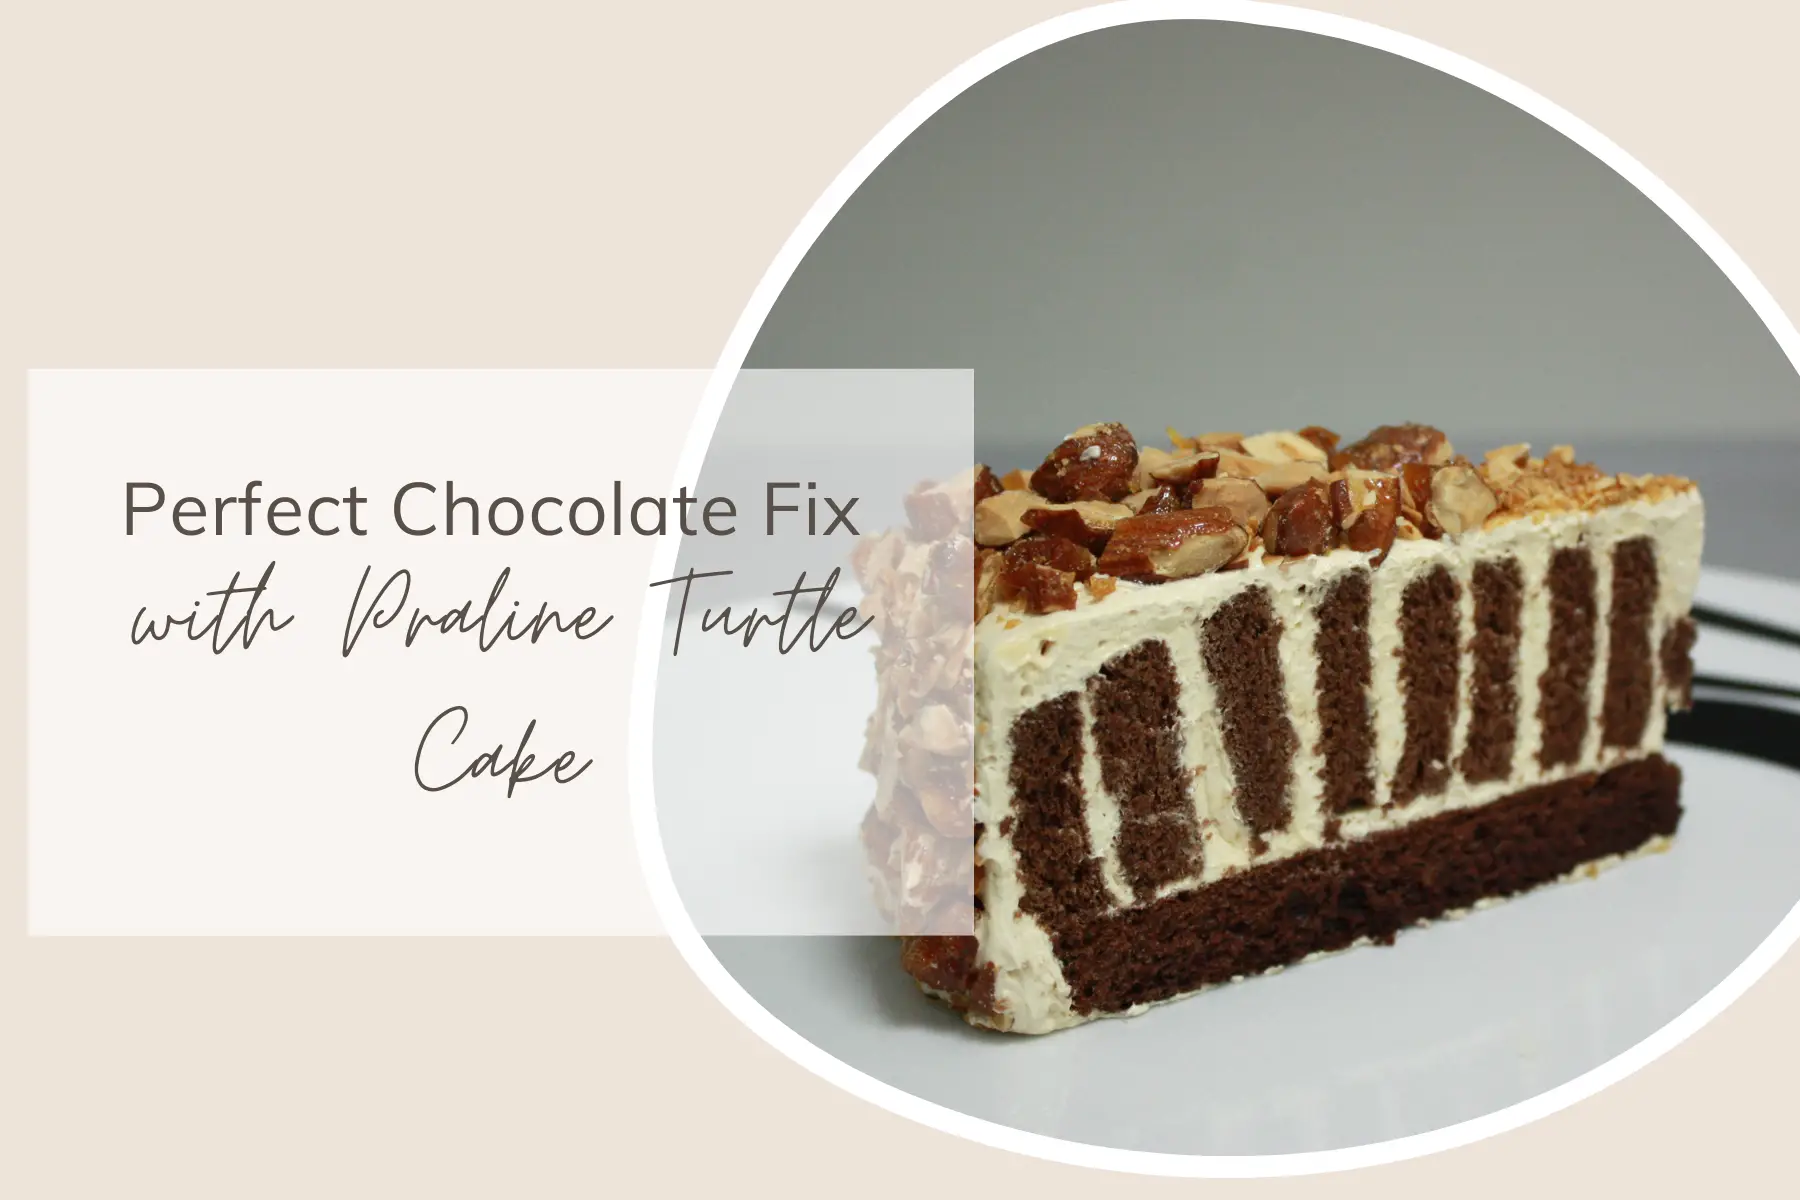 Perfect Chocolate Fix with Praline Turtle Cake